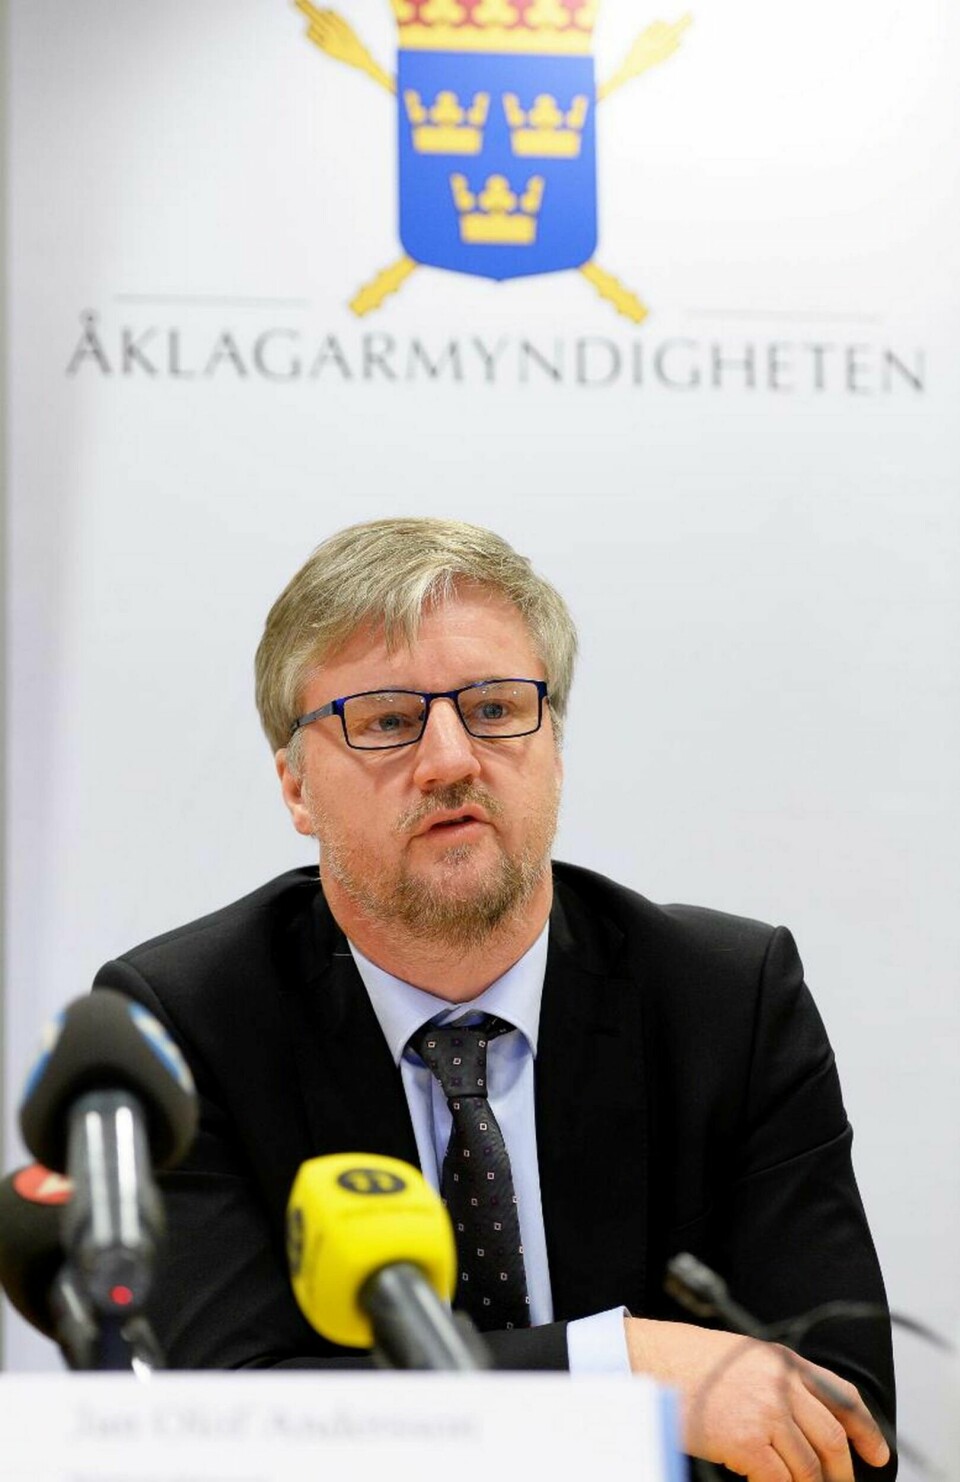 Åklagare Jan Olof Andersson.